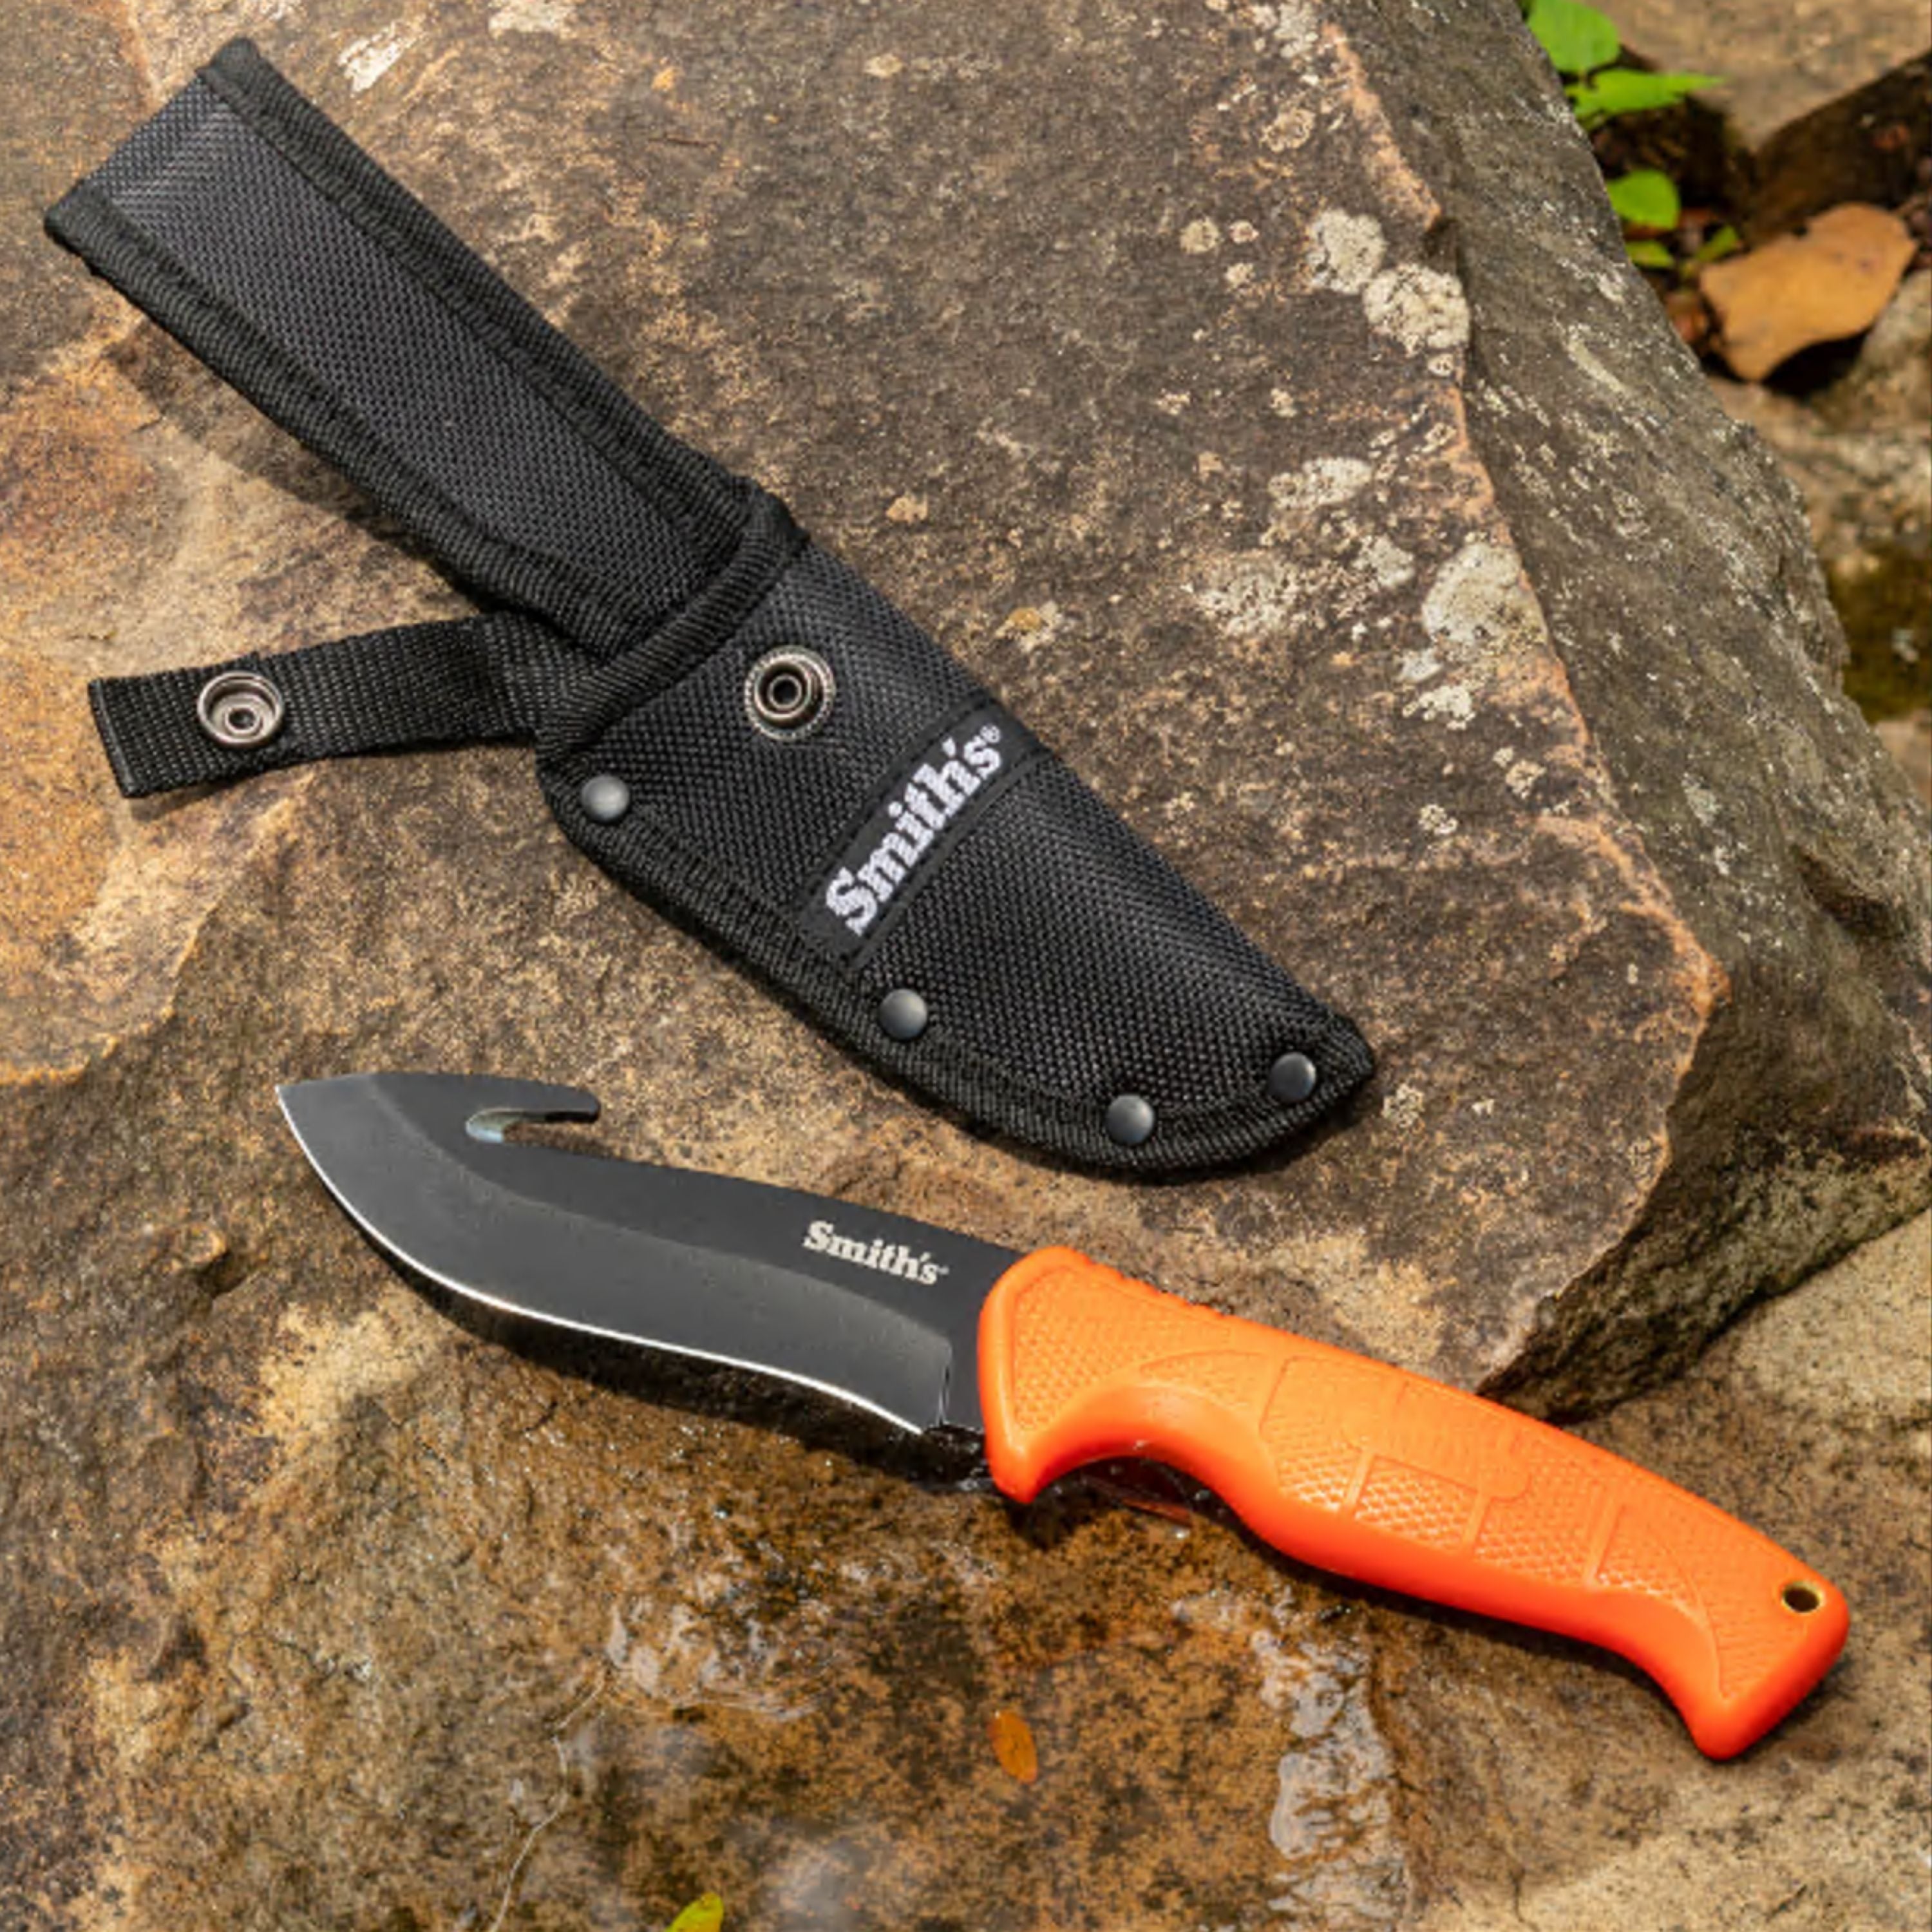 Edgesport fixed blade gut hook knive and sharpener combo